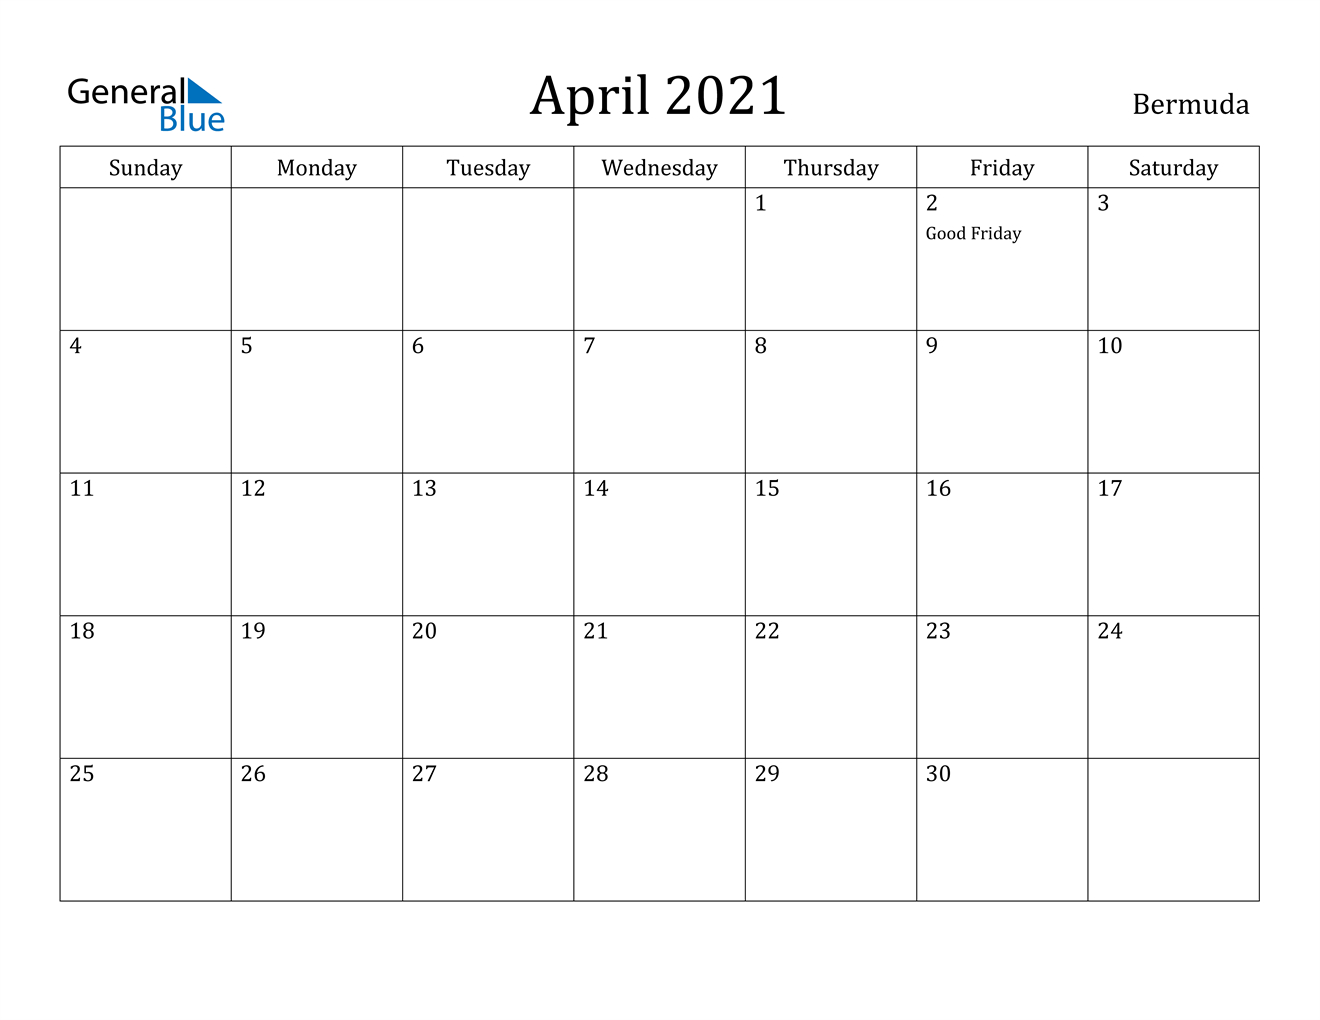 April 2021 Calendar - Bermuda